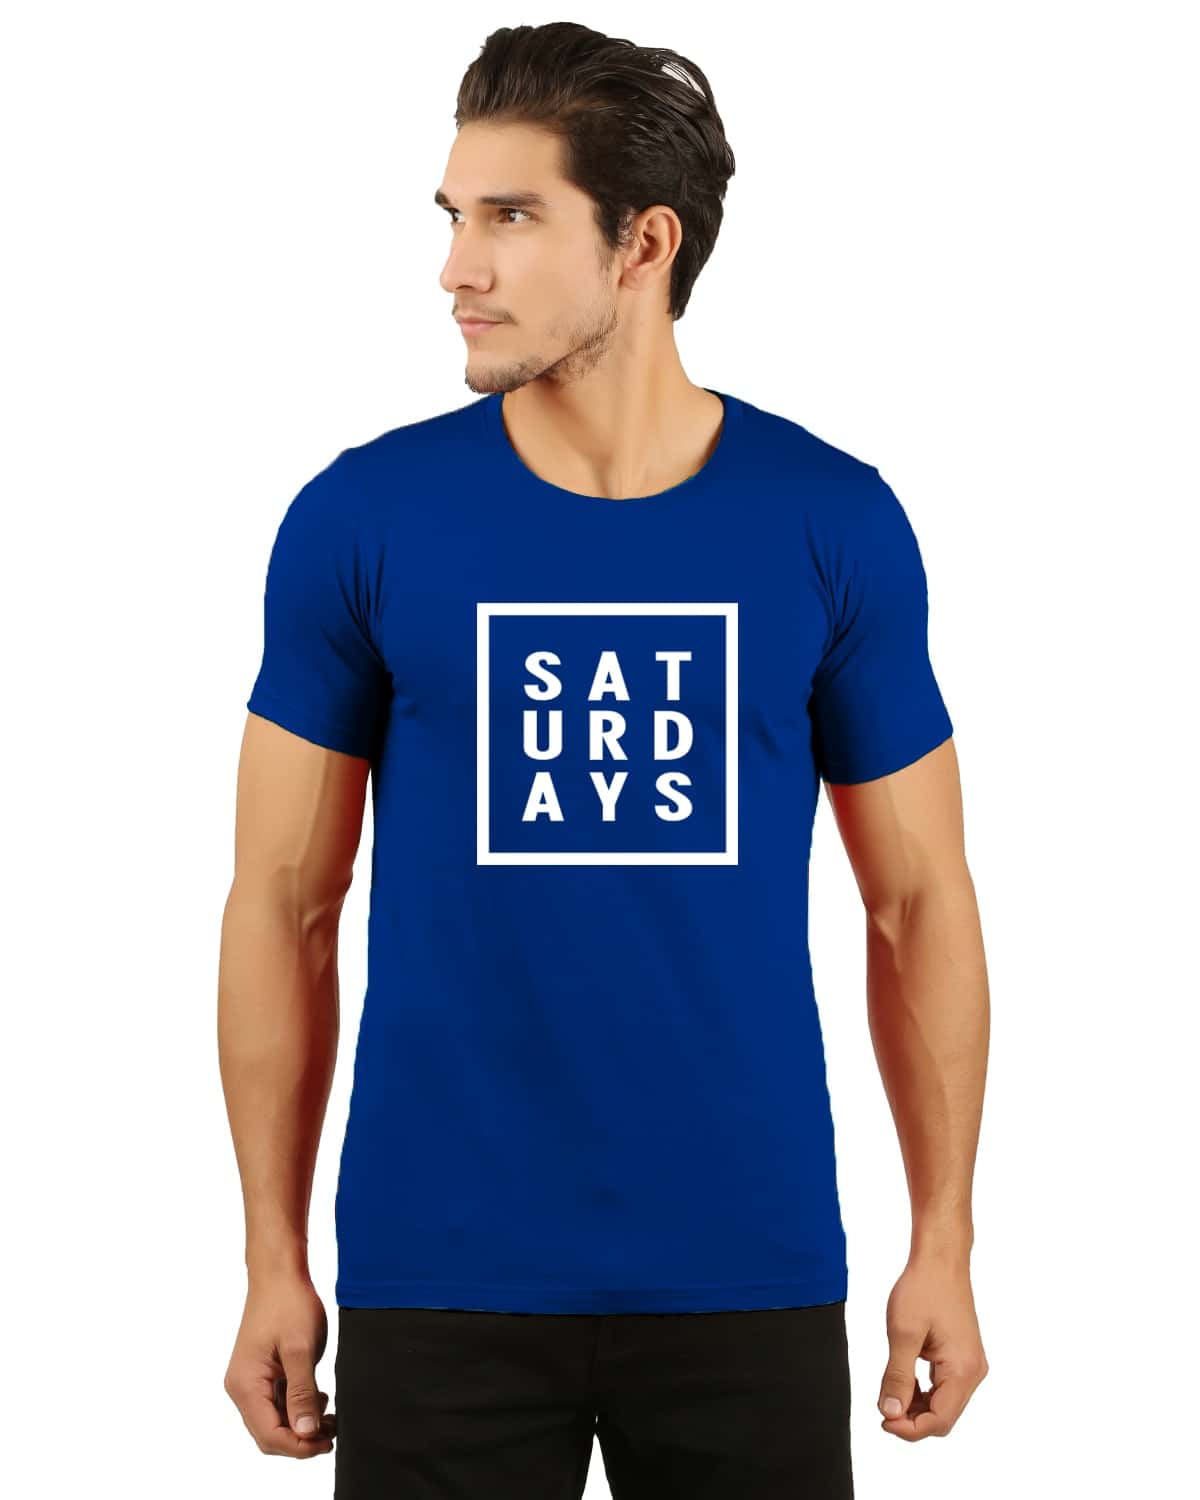 Satuurday printed tshirt men round neck royal blue